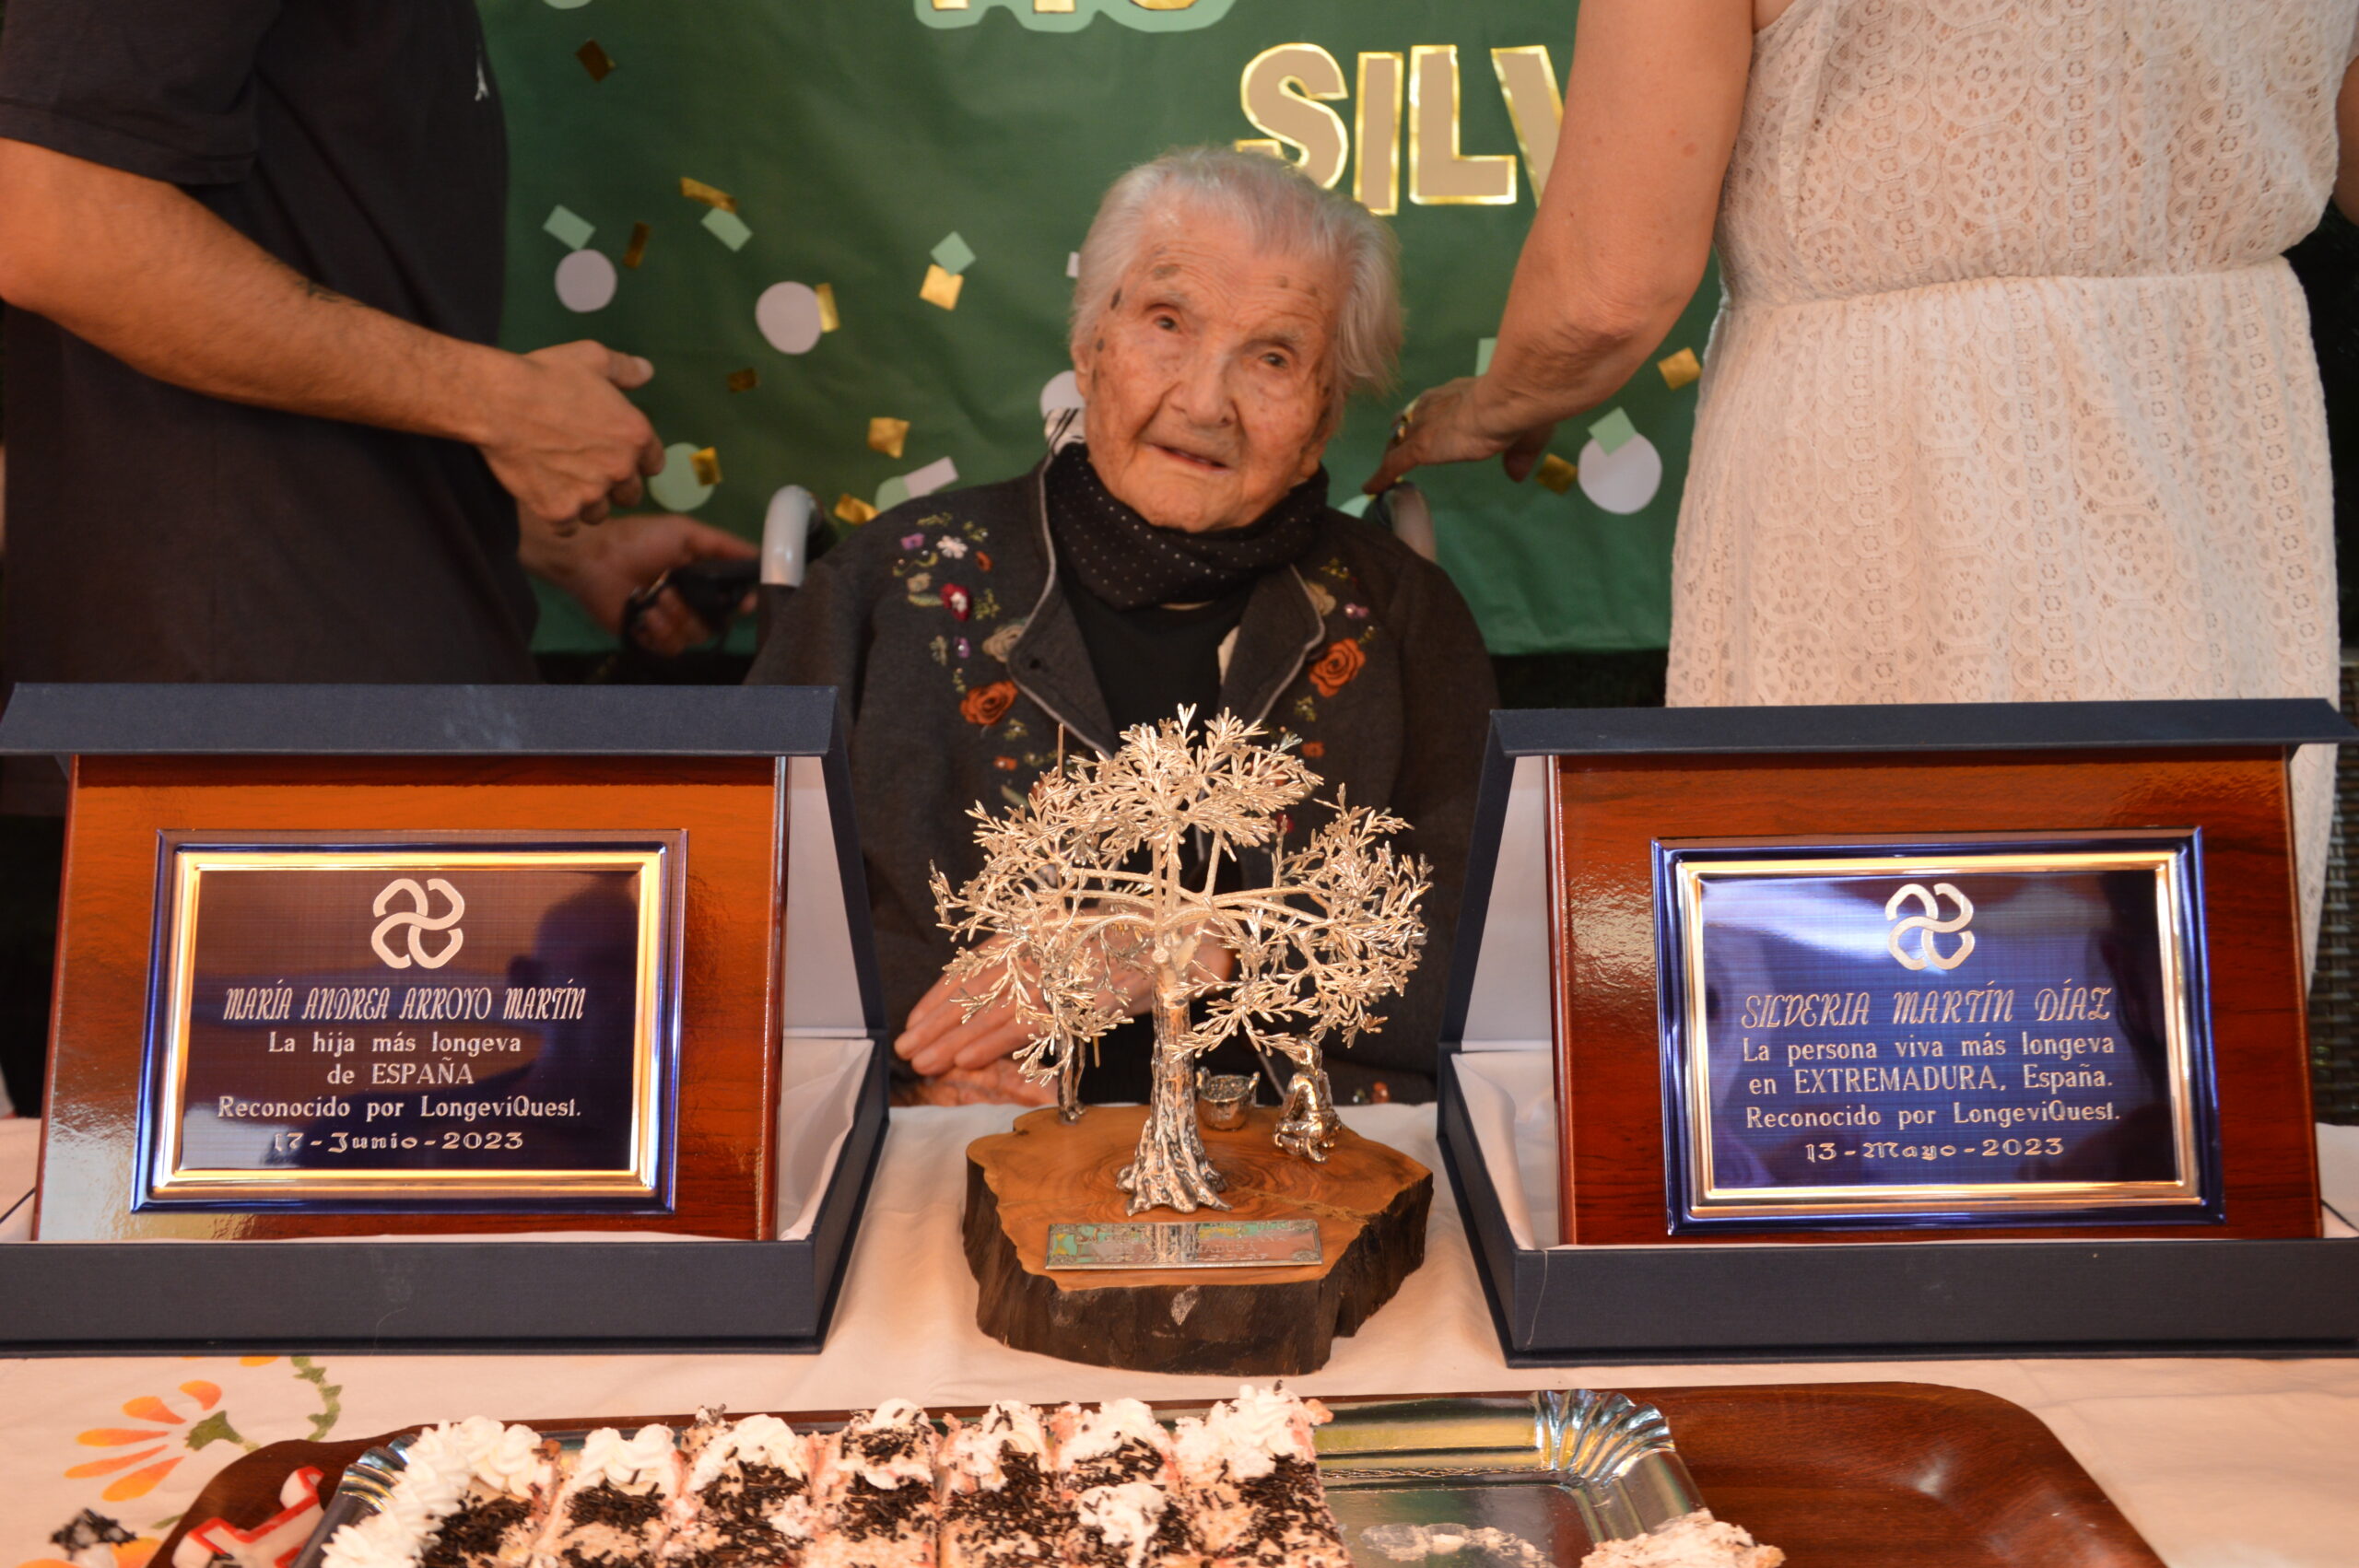 Silveria Martín Díaz, Spain’s Second Oldest Person, Turns 113